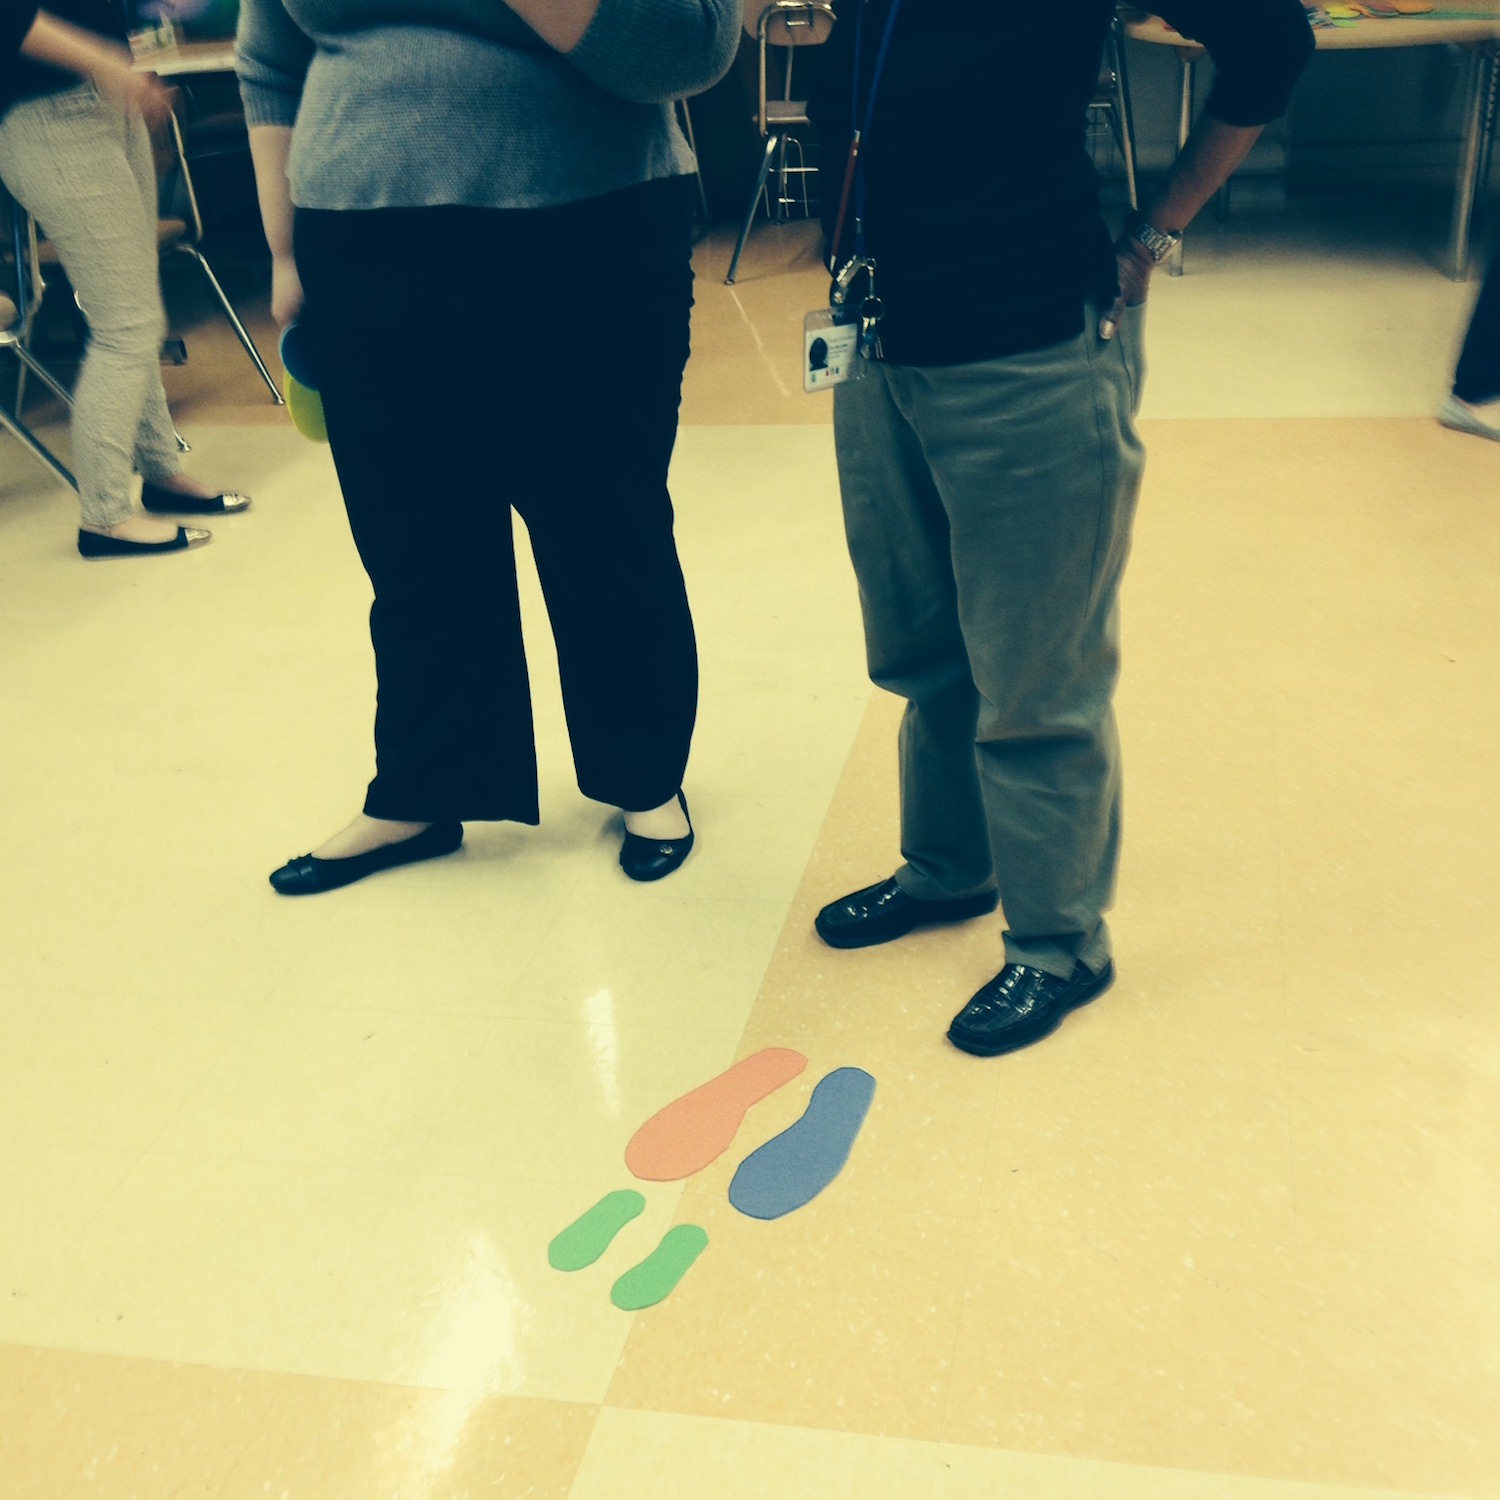 teacher circle foot steps activity